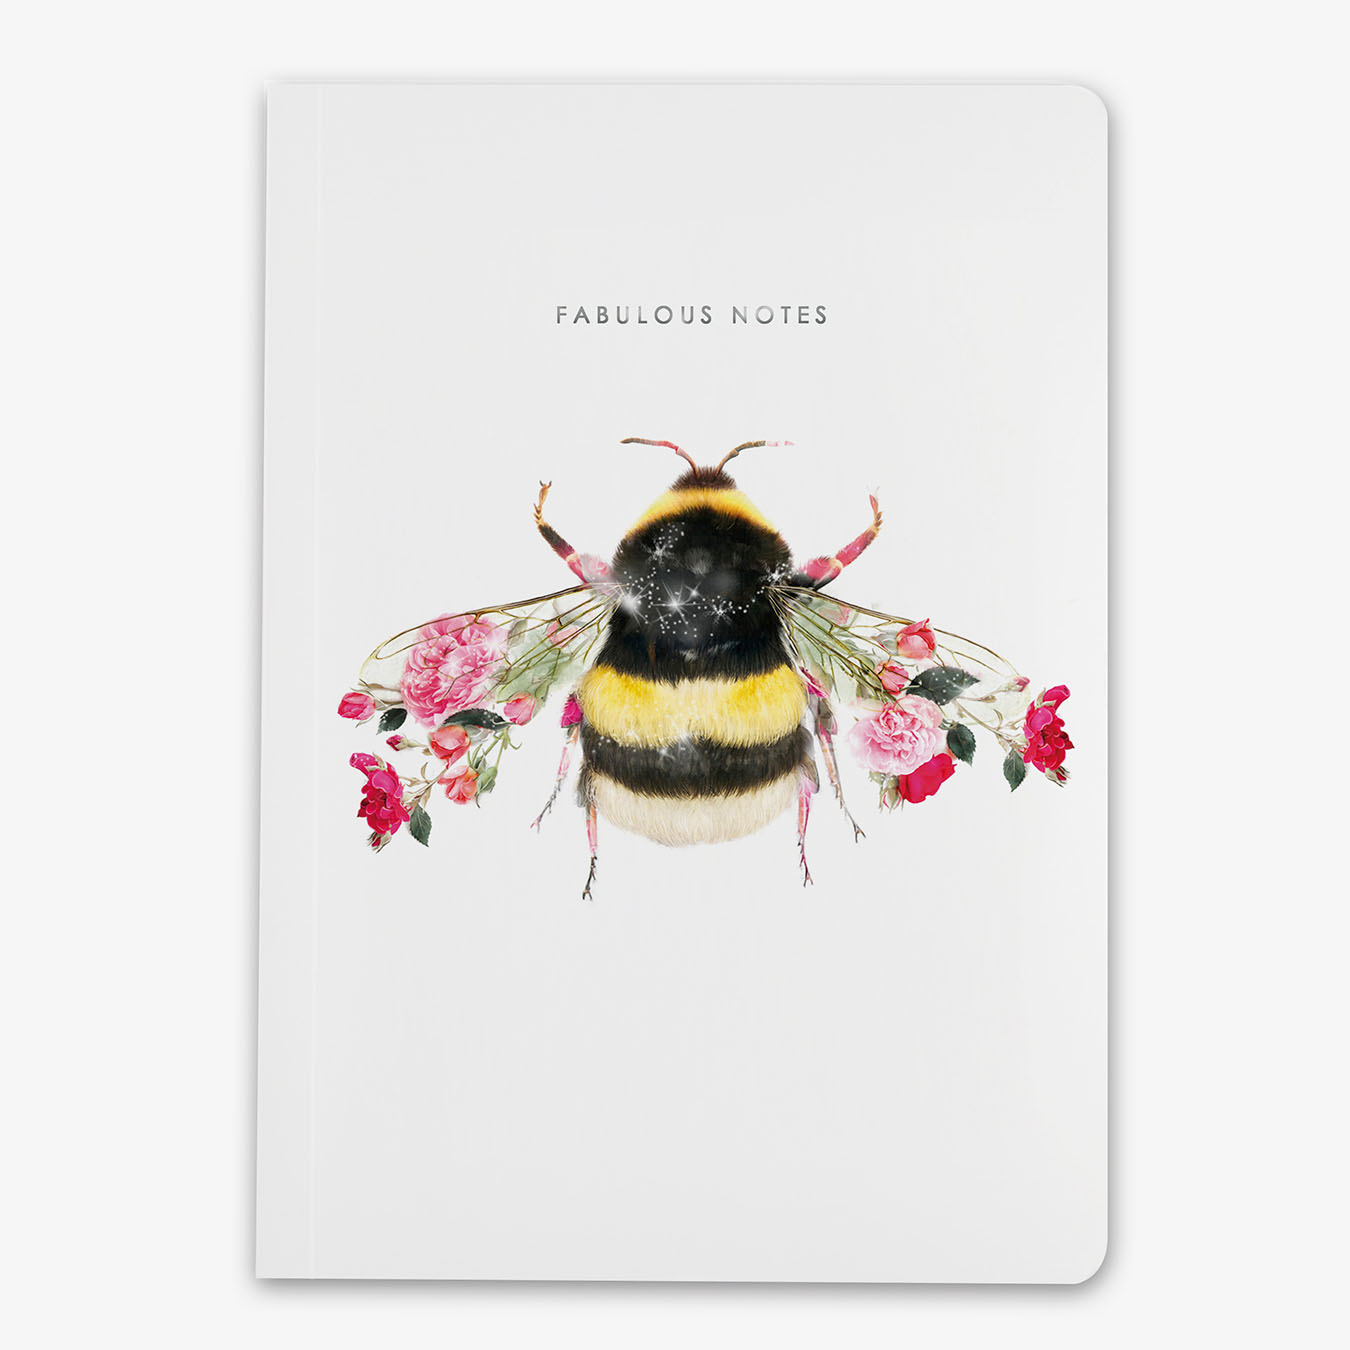 Lola Design | Bee Luxury A5 Notebook